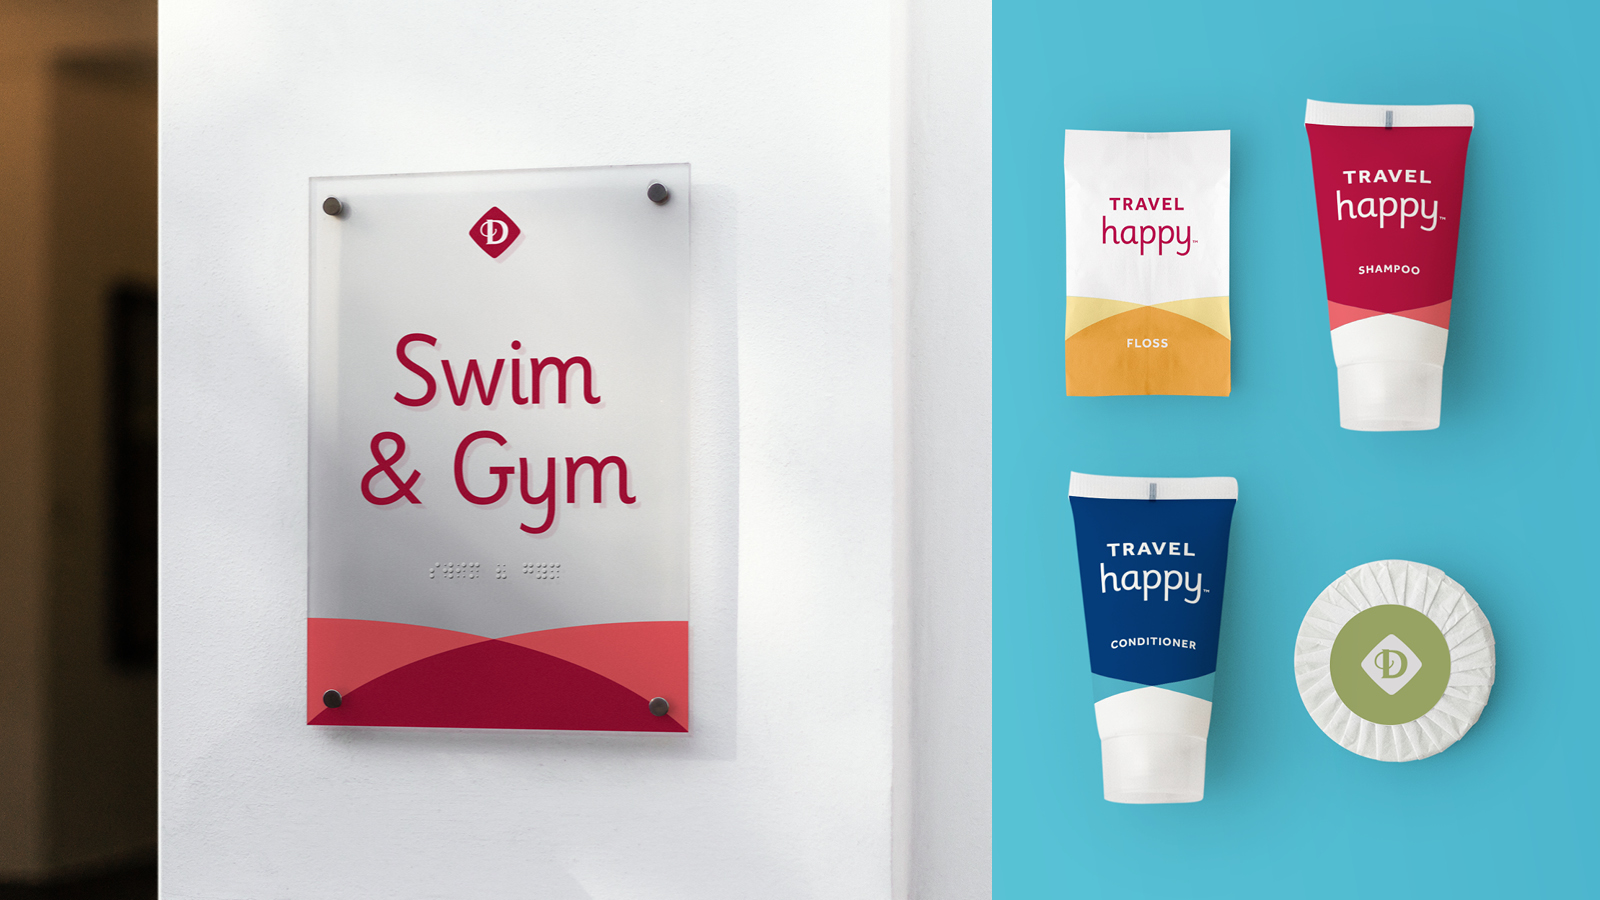 Drury Hotels branded "swim & gym" signage and travel soaps